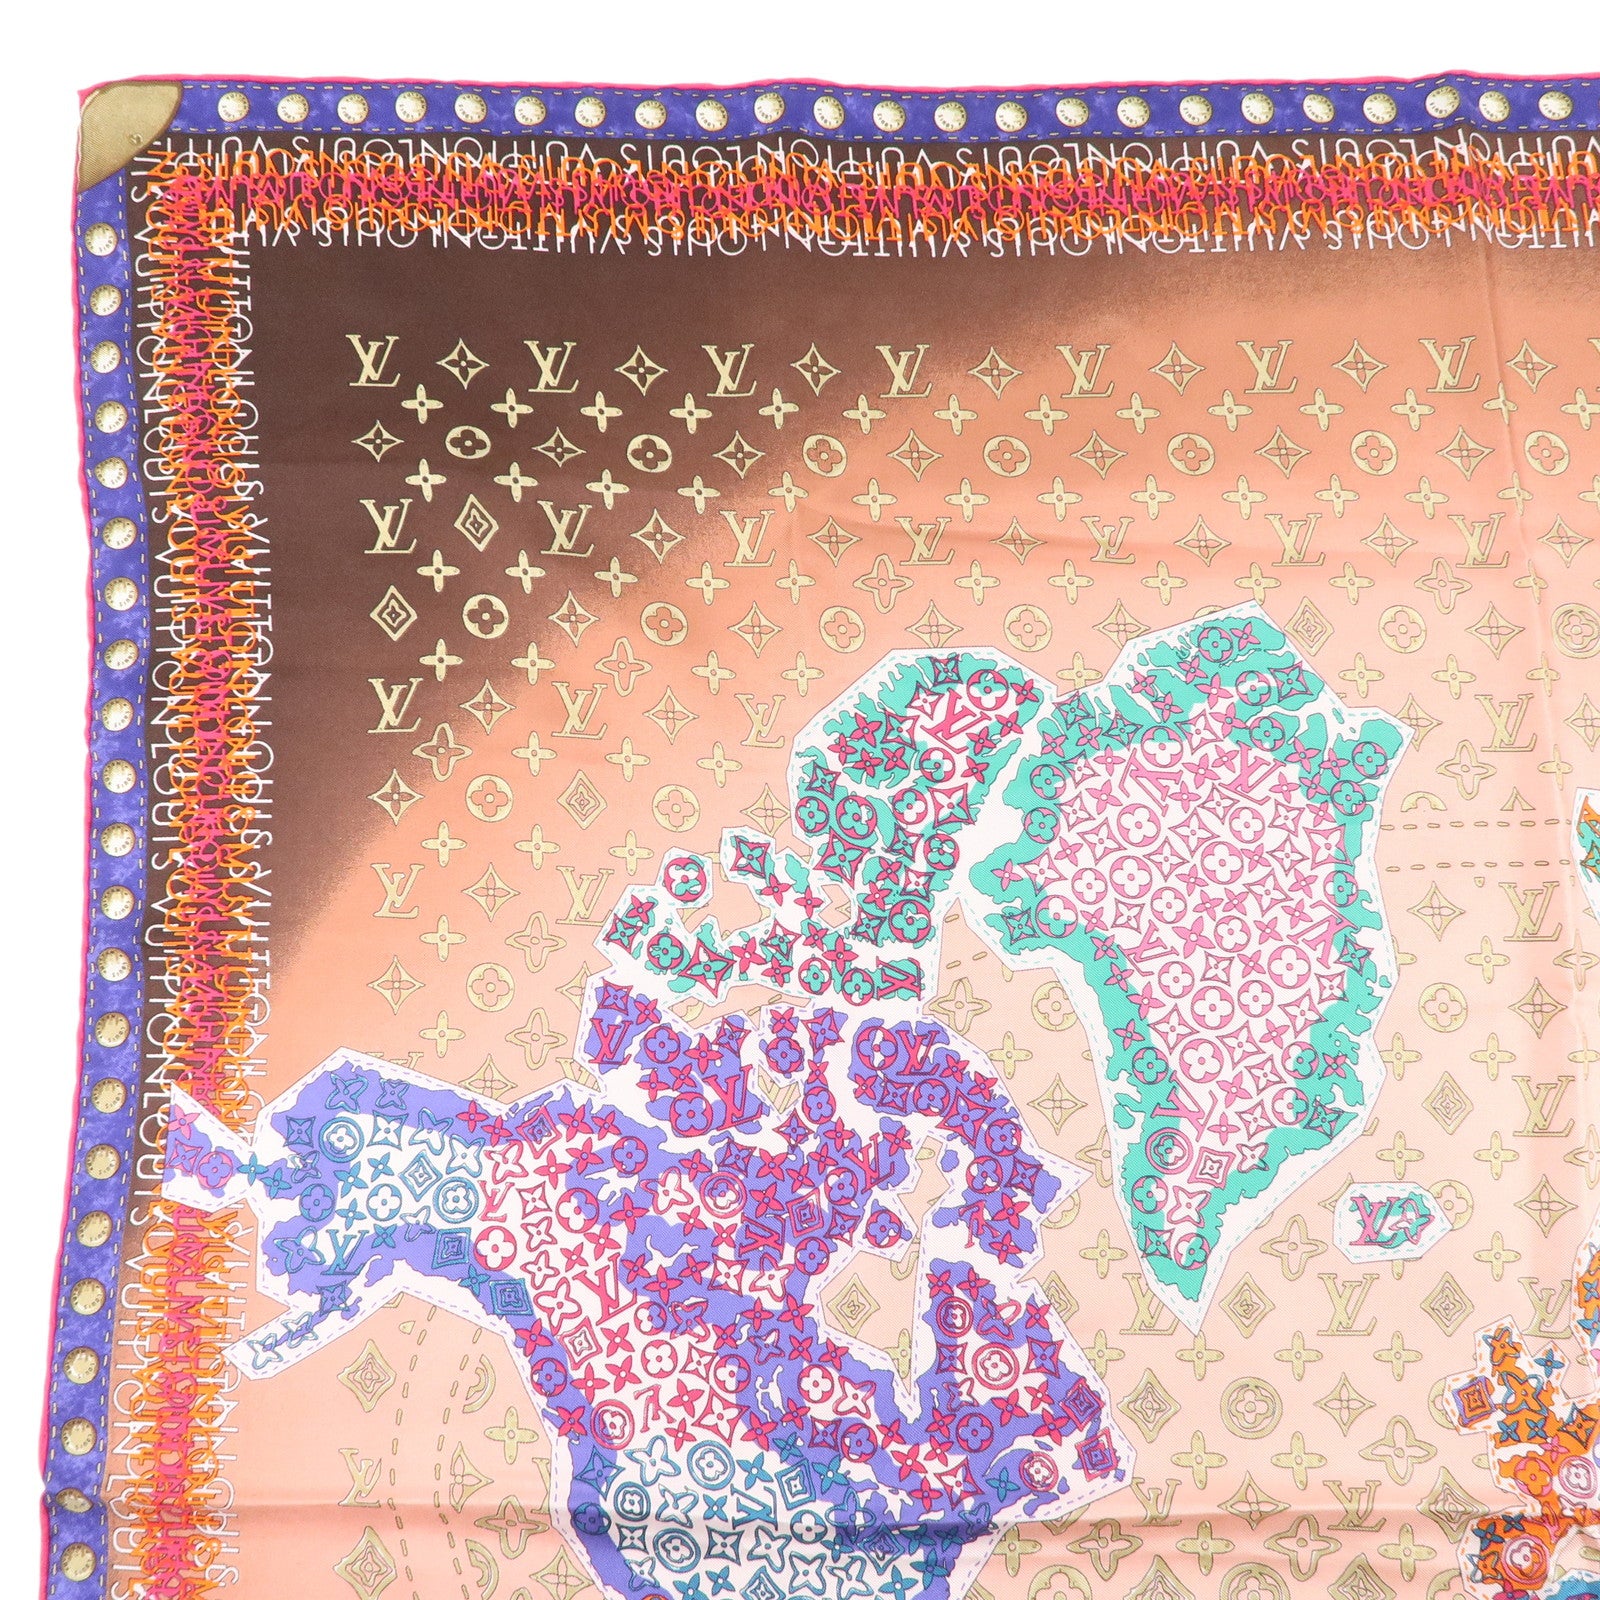 LOUIS VUITTON World Map Printed Square Silk Scarf